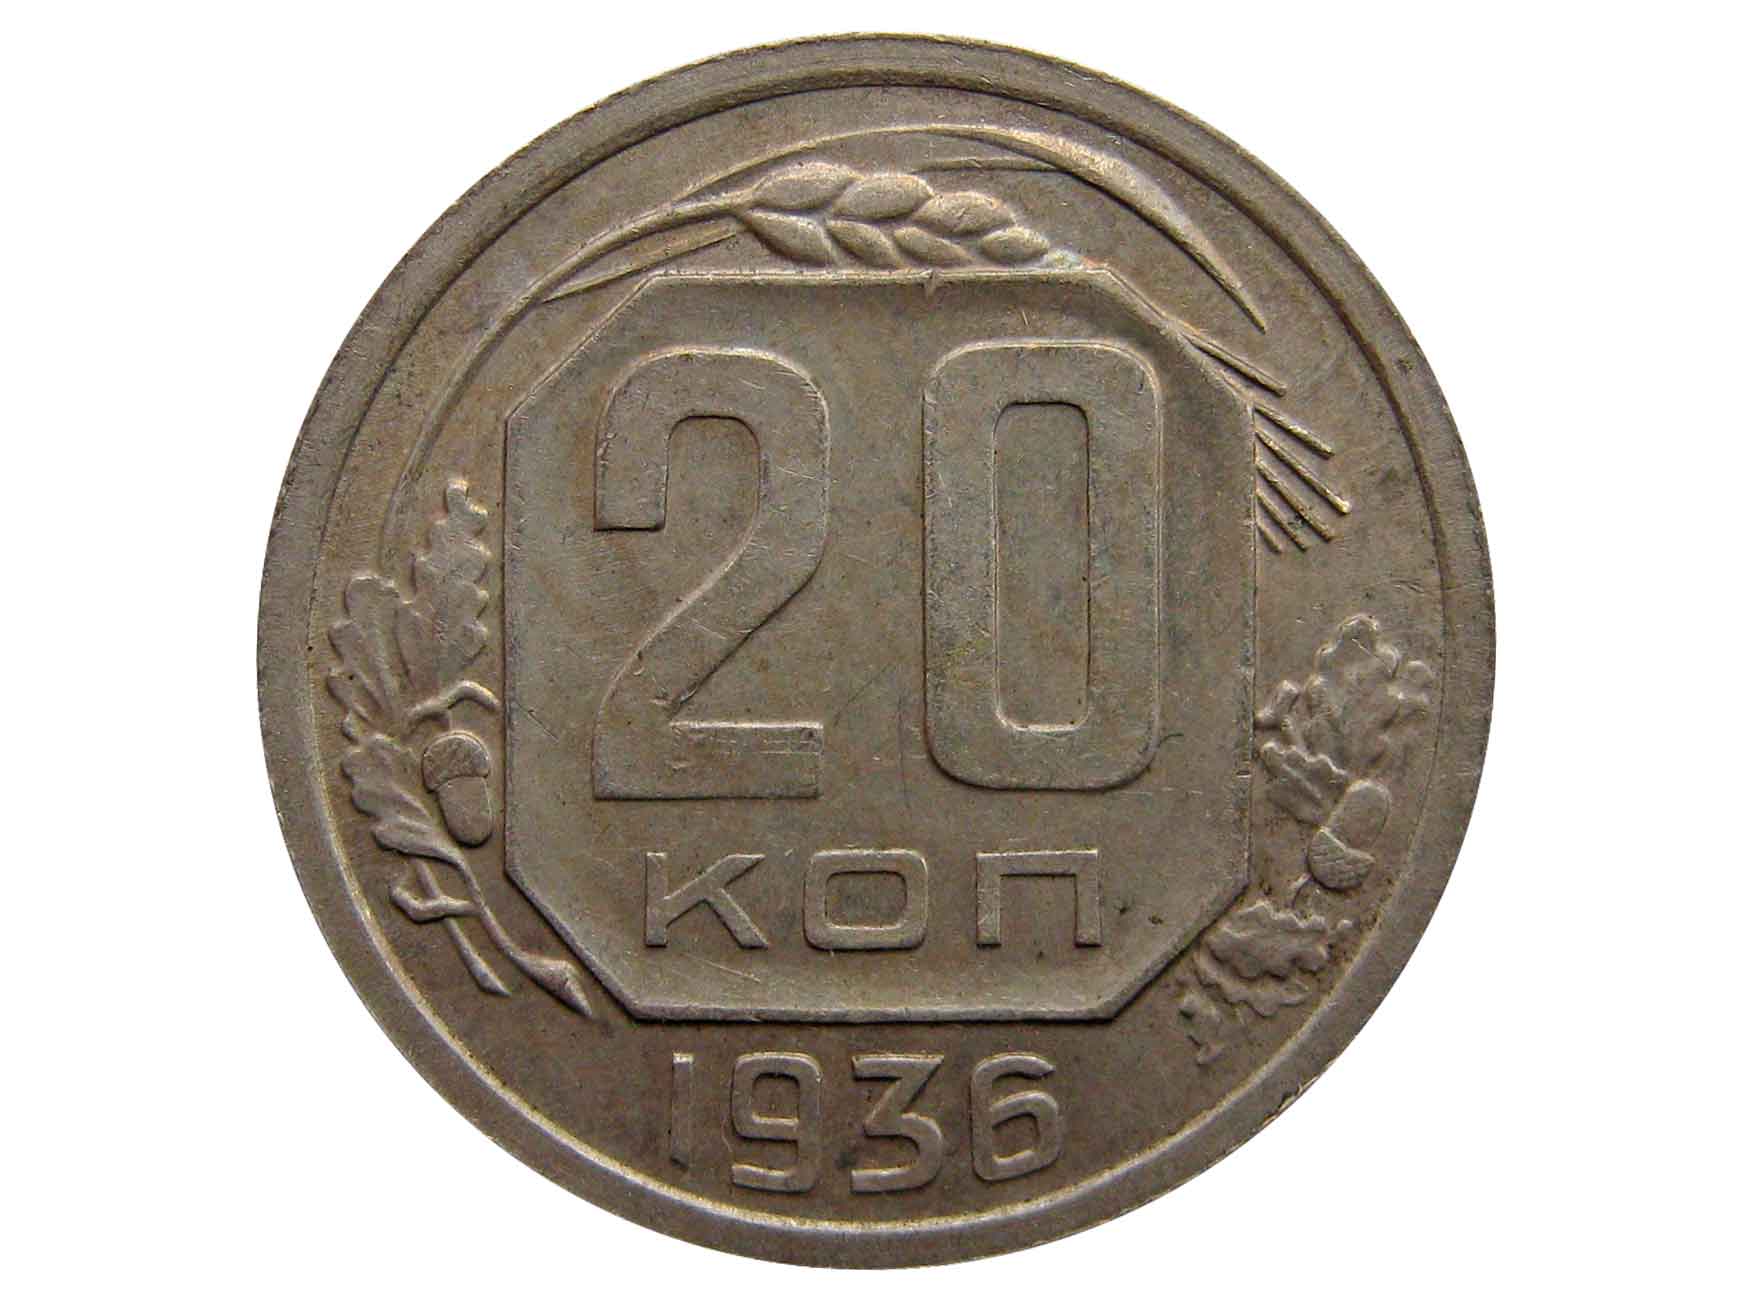 20 копеек 1936. 20 Копеек 1936 года. Монета 20 коп 1936 года. 20 Копеек 1936 ценная.